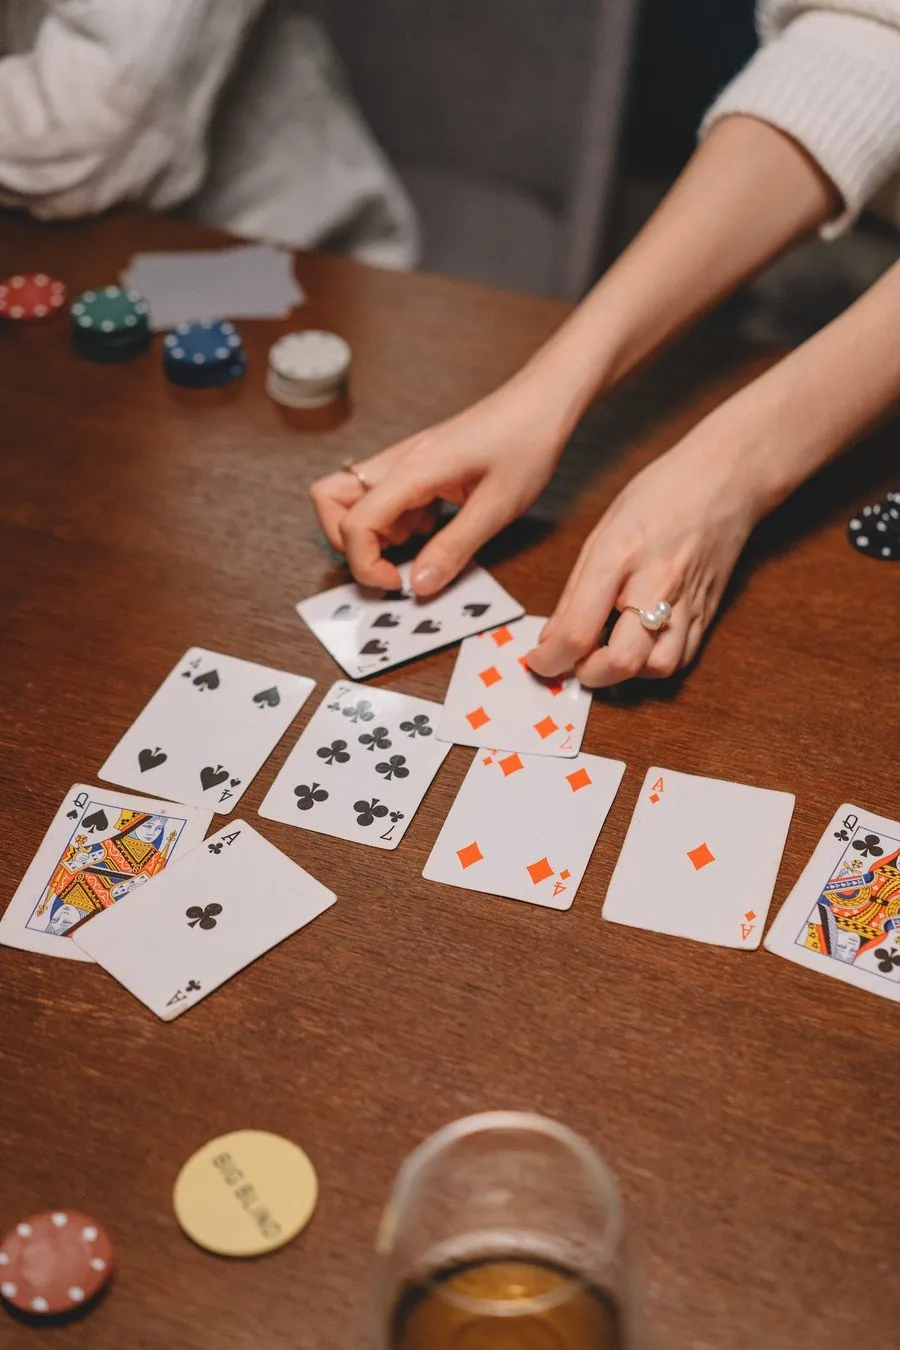 Top 10 Worst Starting Hands for Texas Hold ‘Em Poker